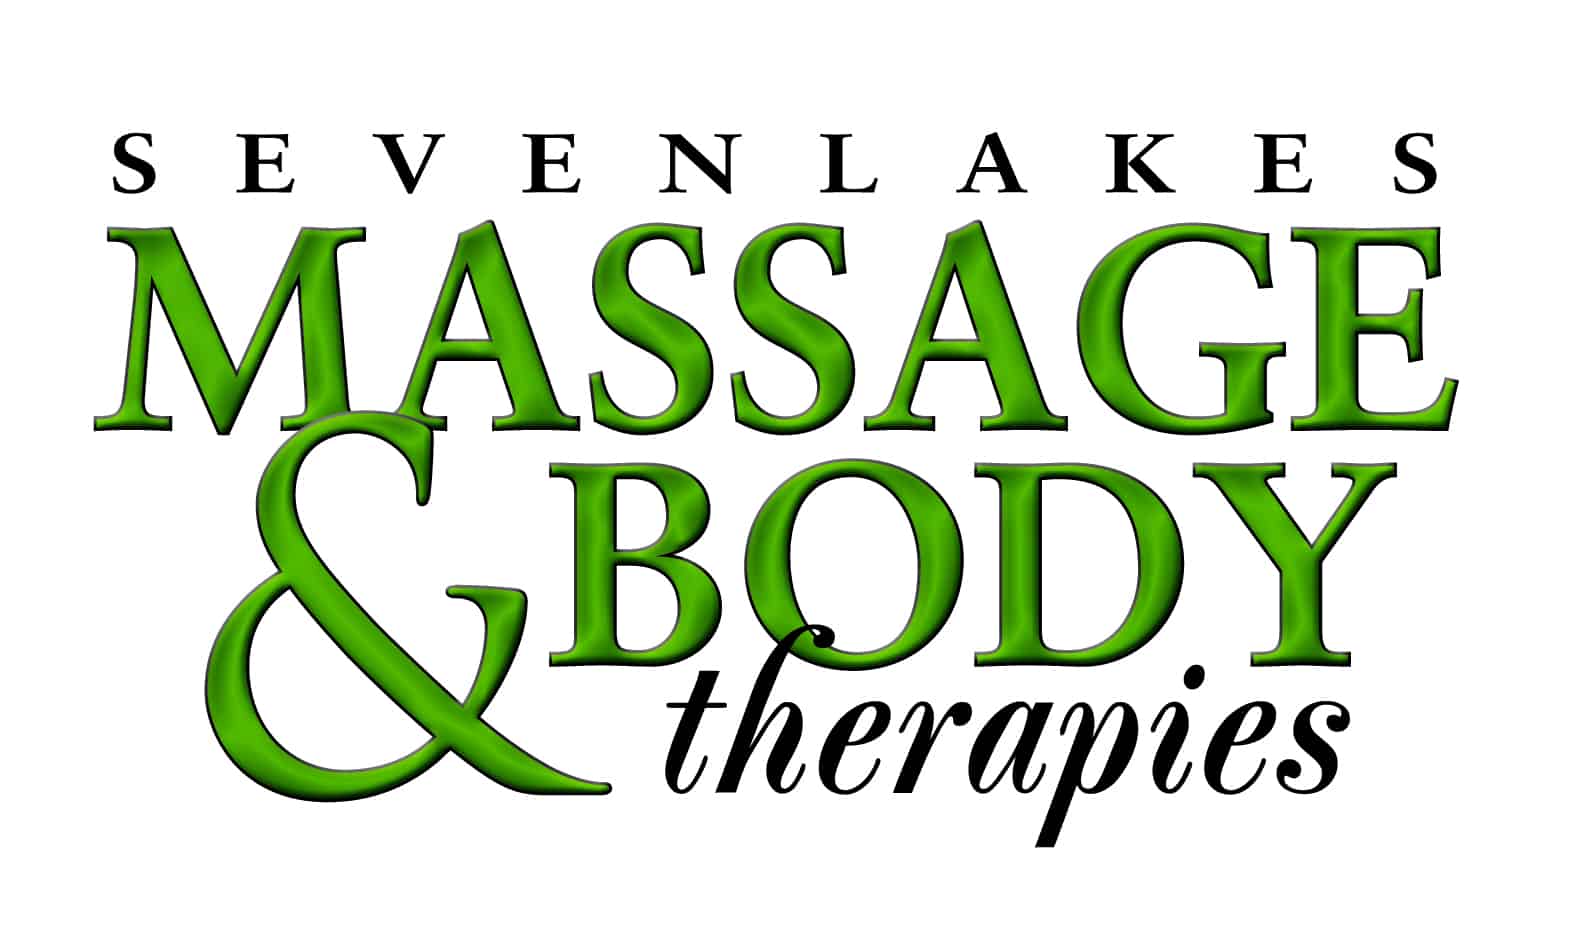 Seven Lakes Massage & Body Therapies